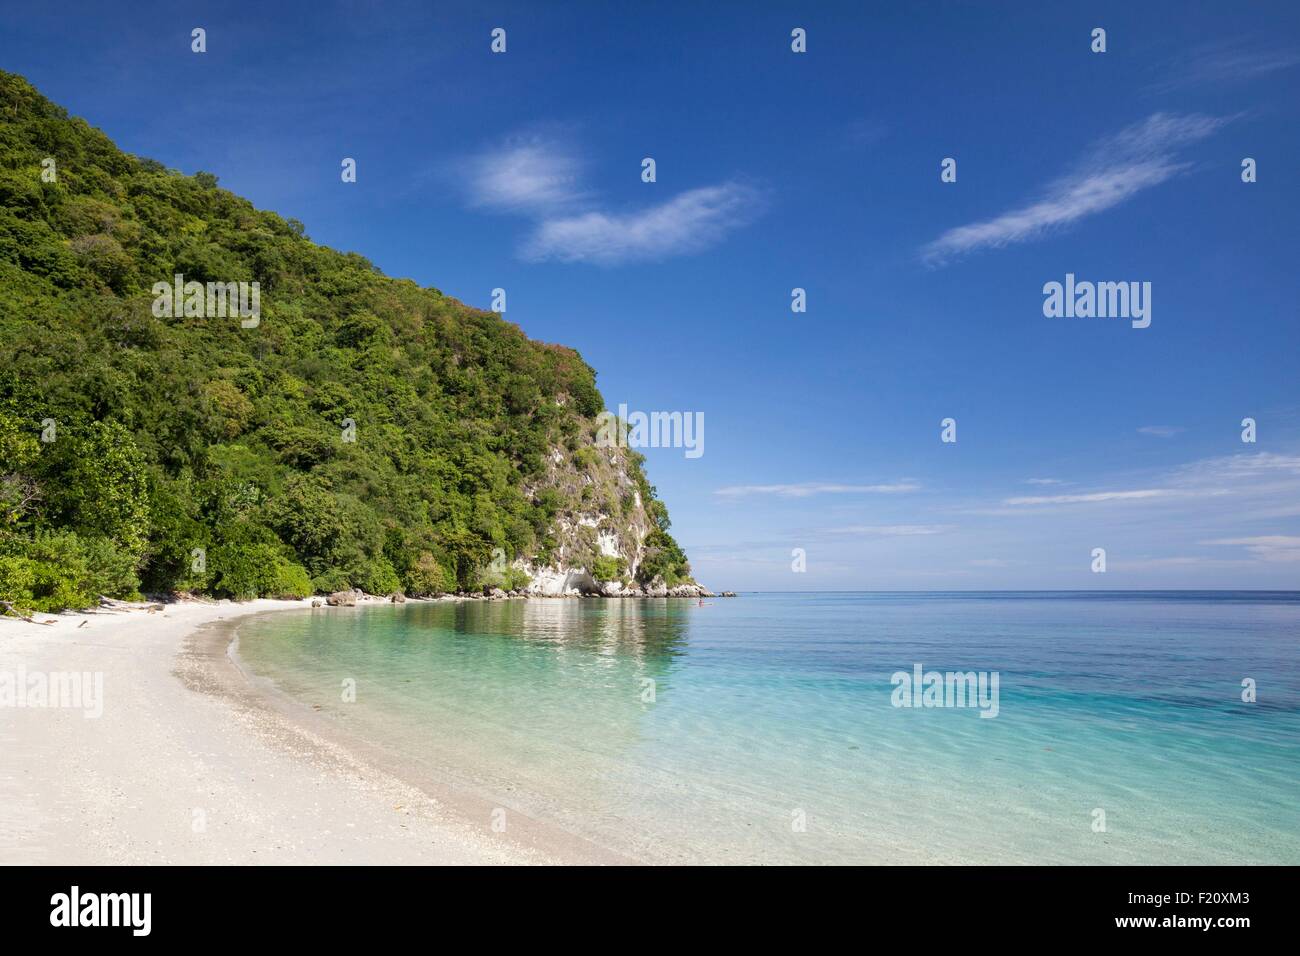 Indonesia, Lesser Sunda Islands, Alor Island, Batu Putih beach (the white stone) Stock Photo